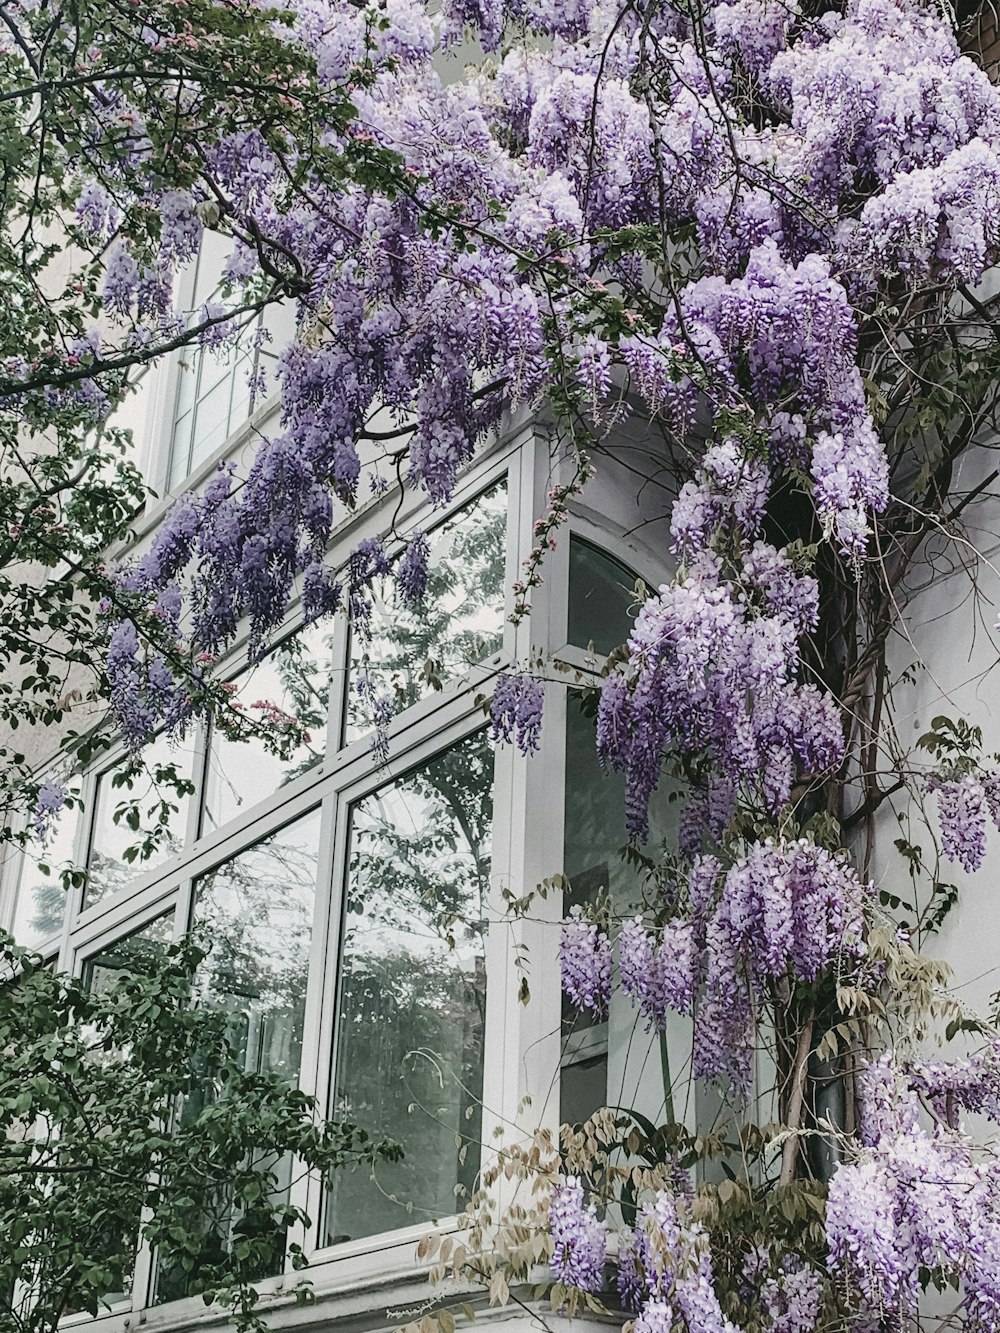 lilac shrubs near glass window